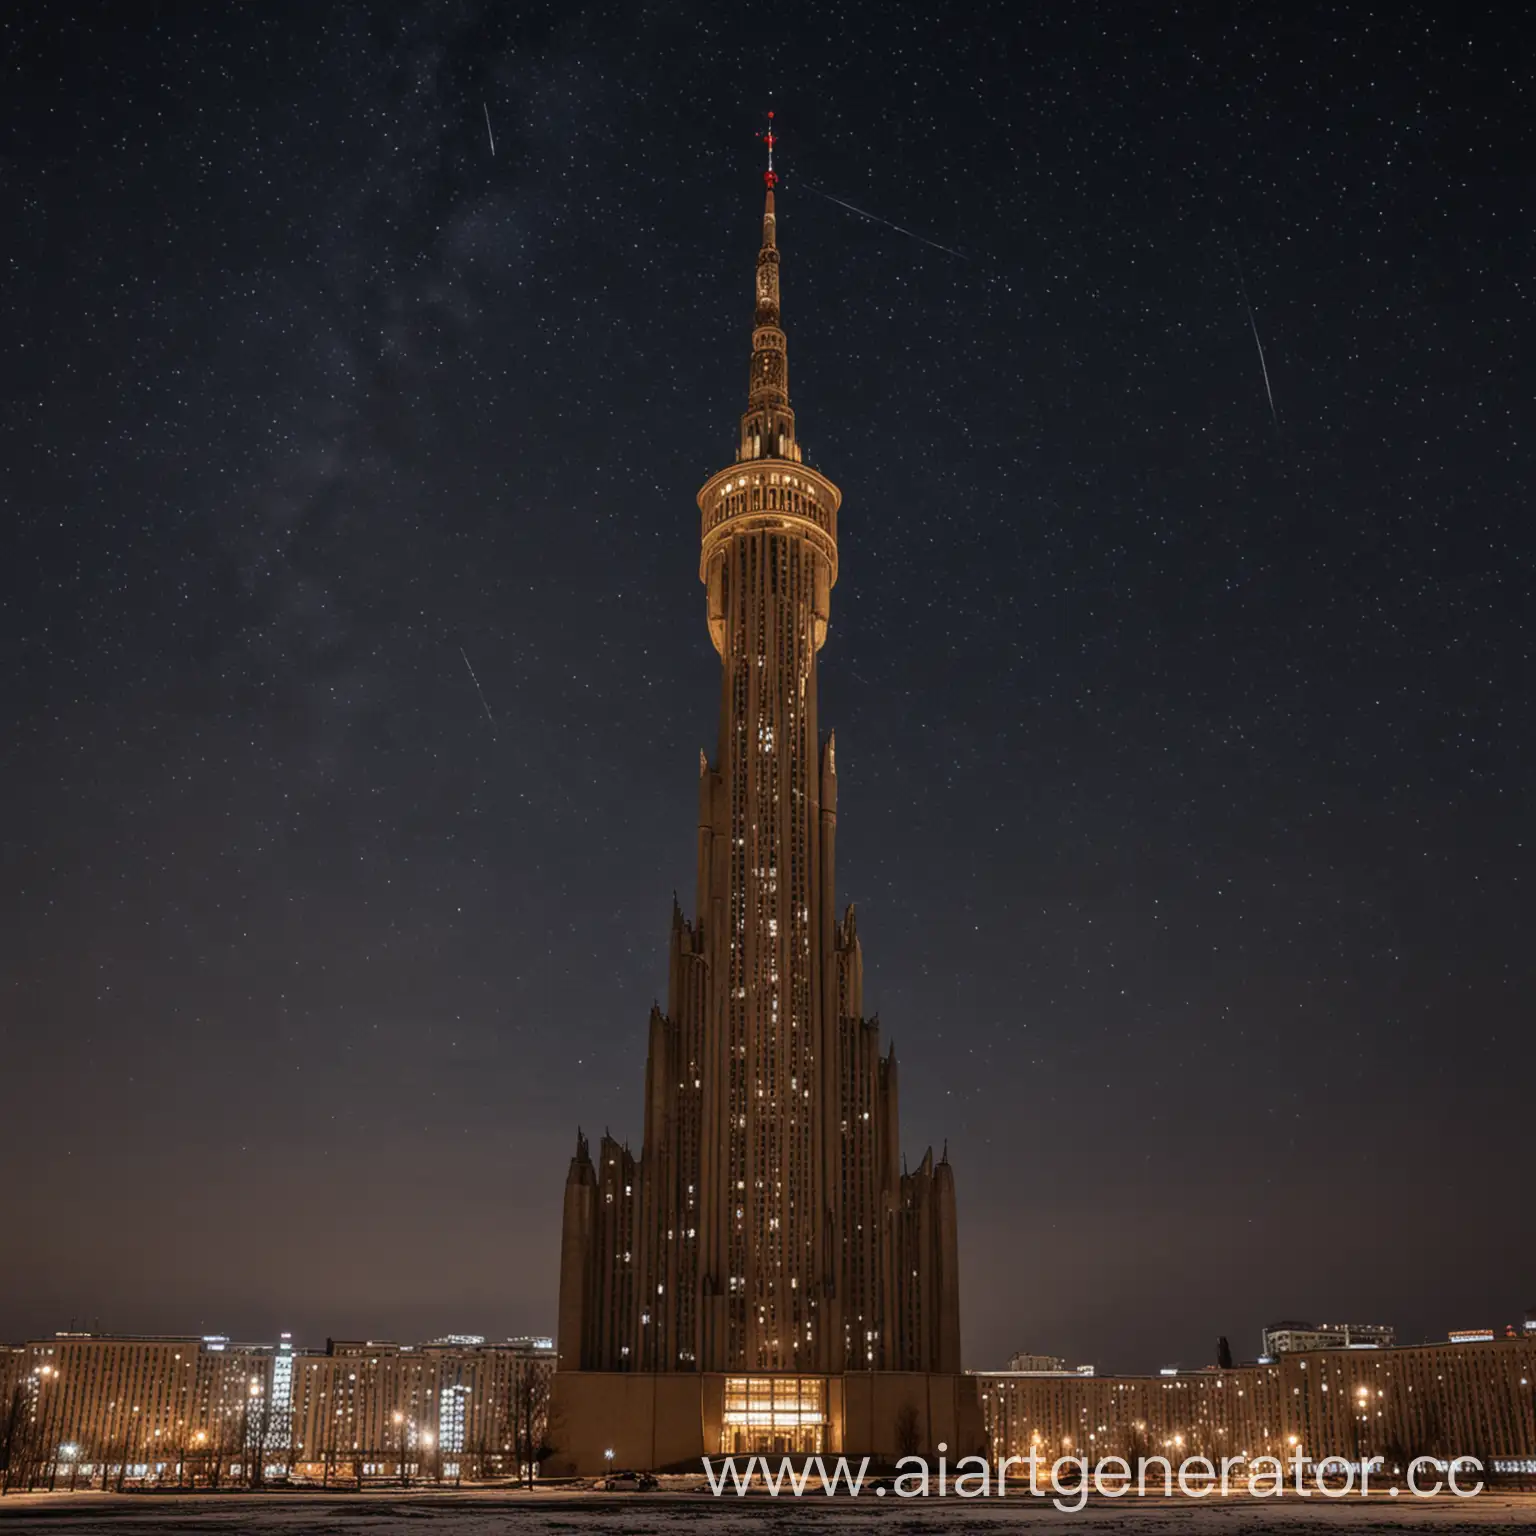 Iconic-Soviet-Skyscraper-with-Towering-Spire-Under-Starry-Night-Sky